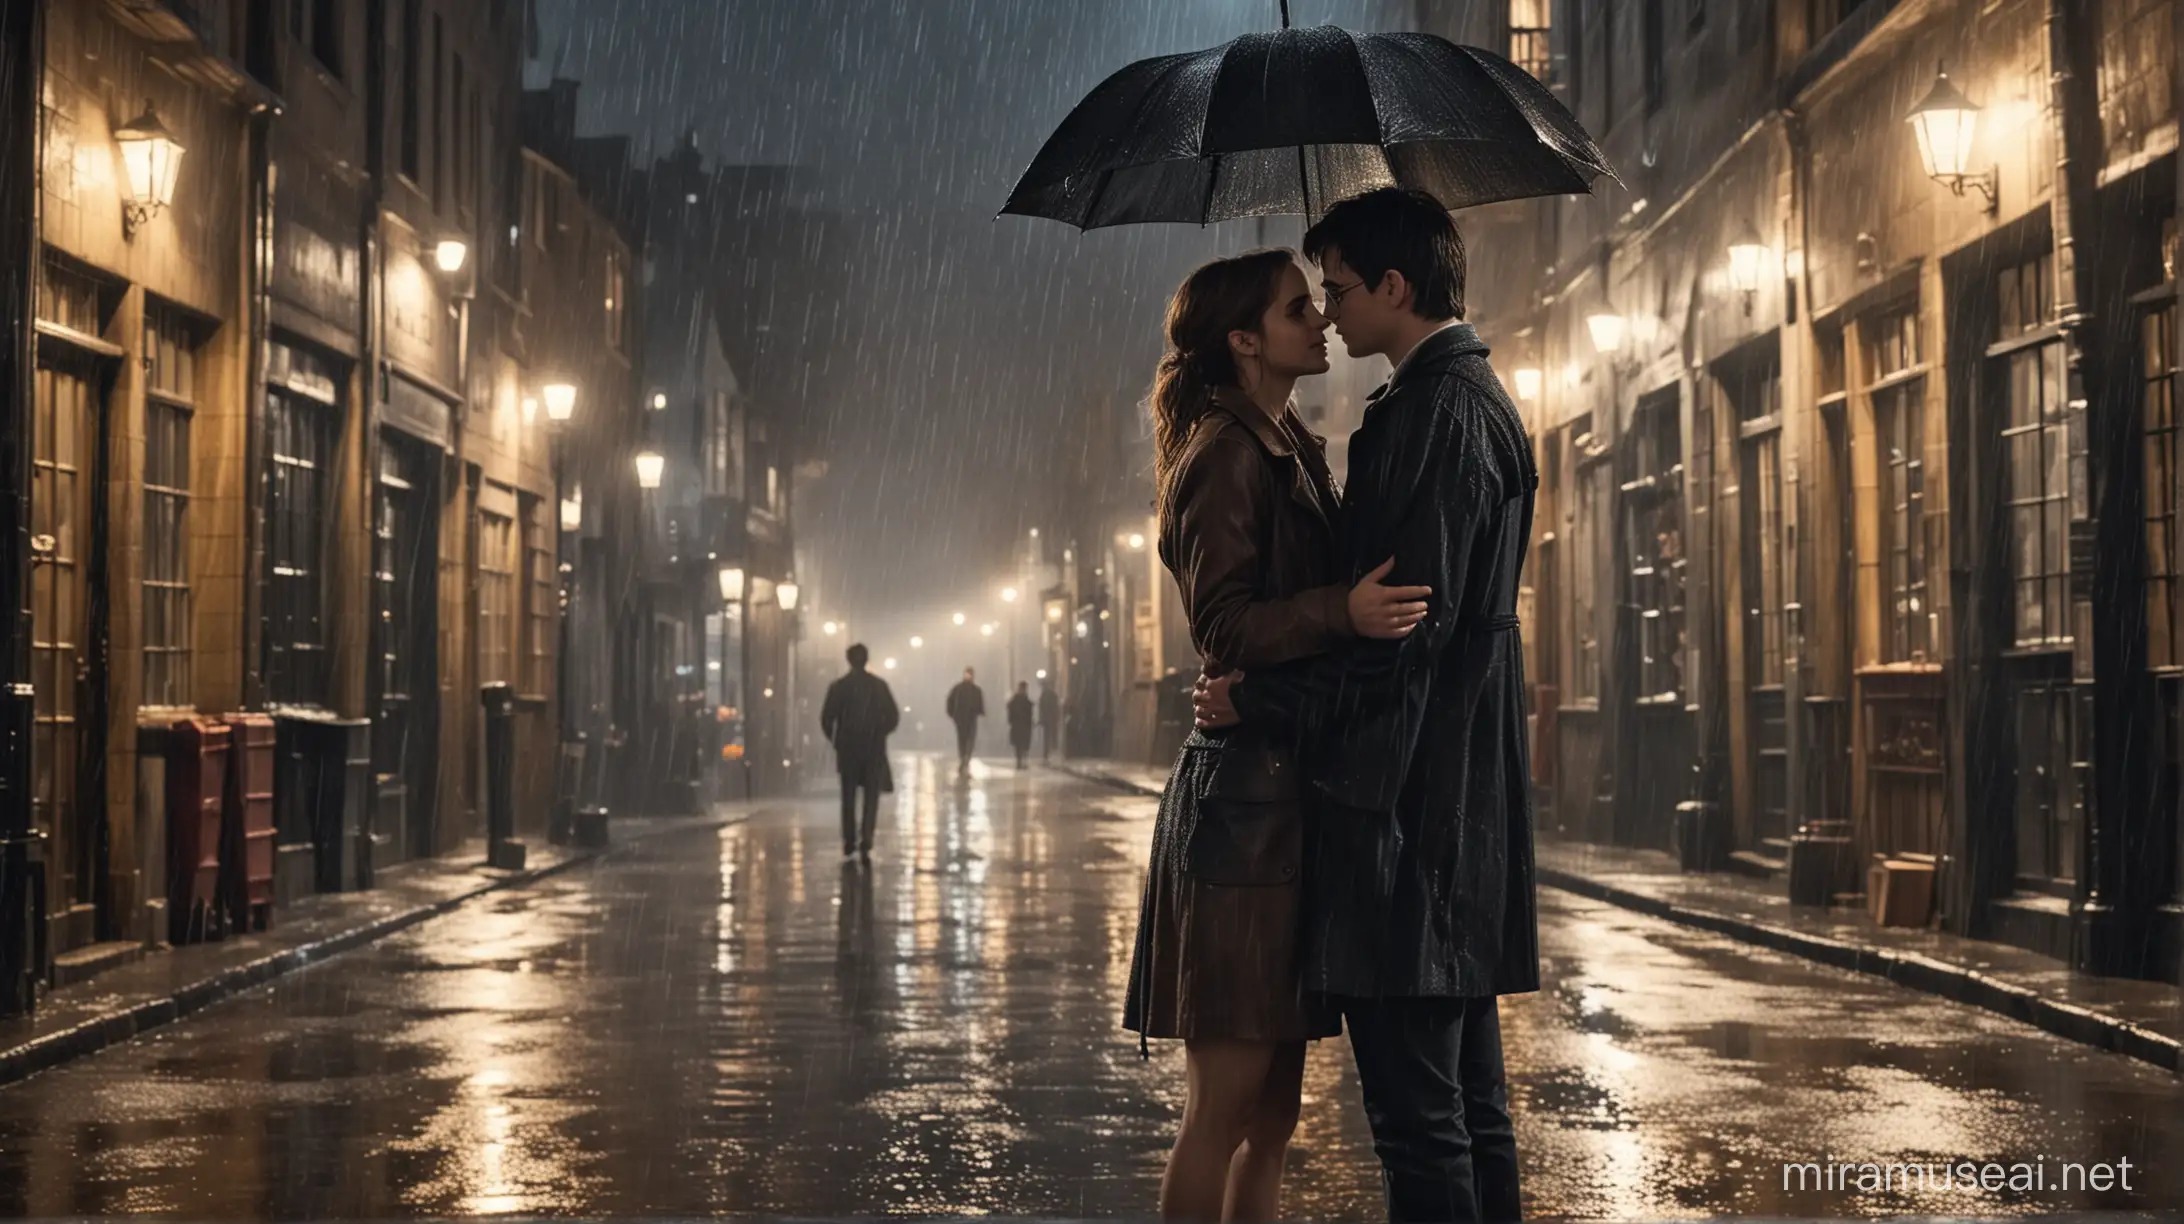 Emma Watson and Harry Potter Romantic Rainy Night Urban Street Encounter